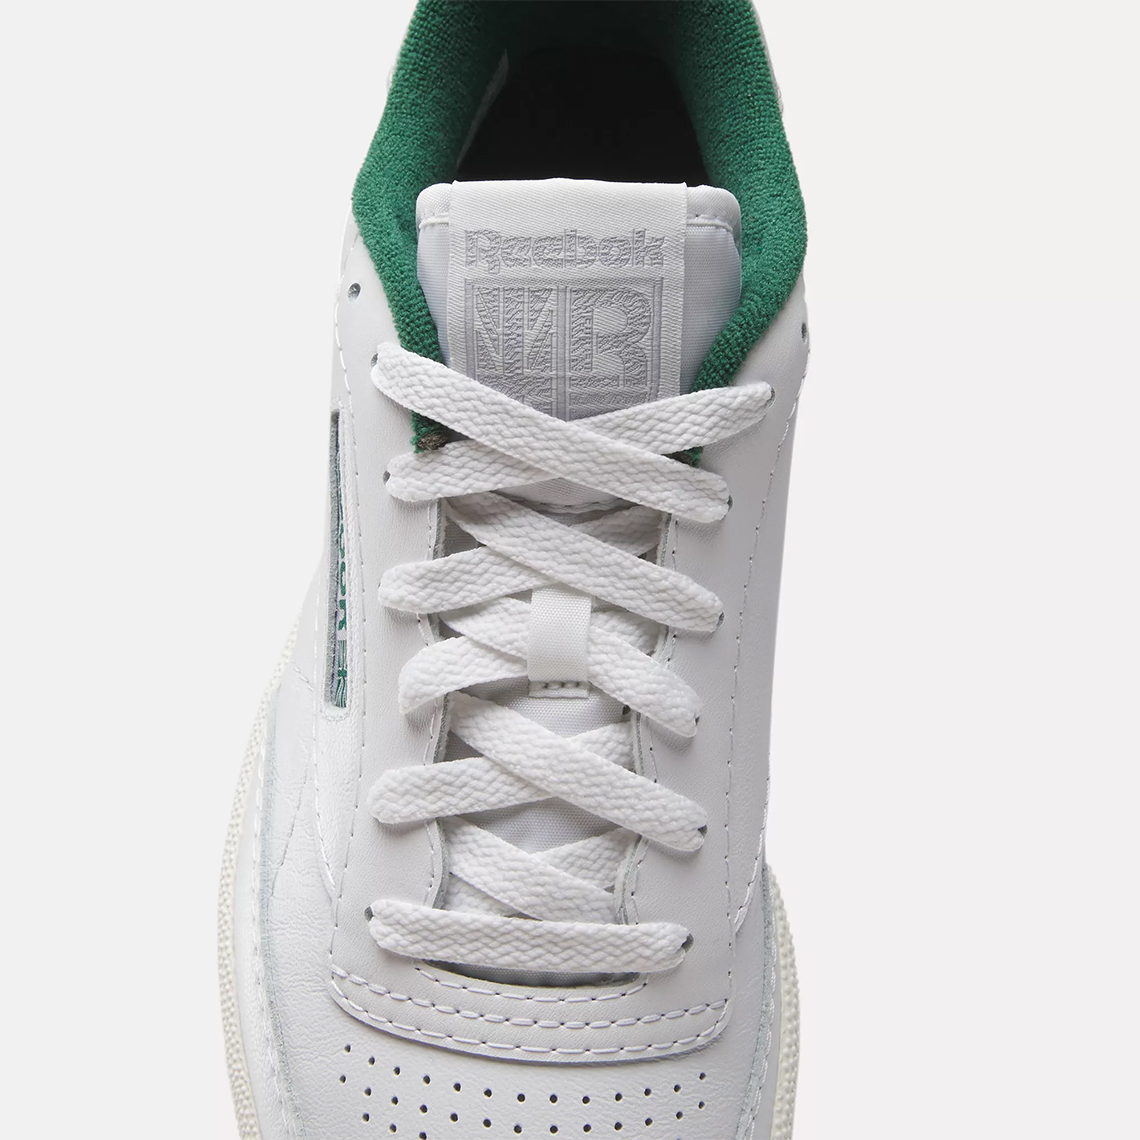 Club C 85 Shoes - White / Chalk / Dark Green